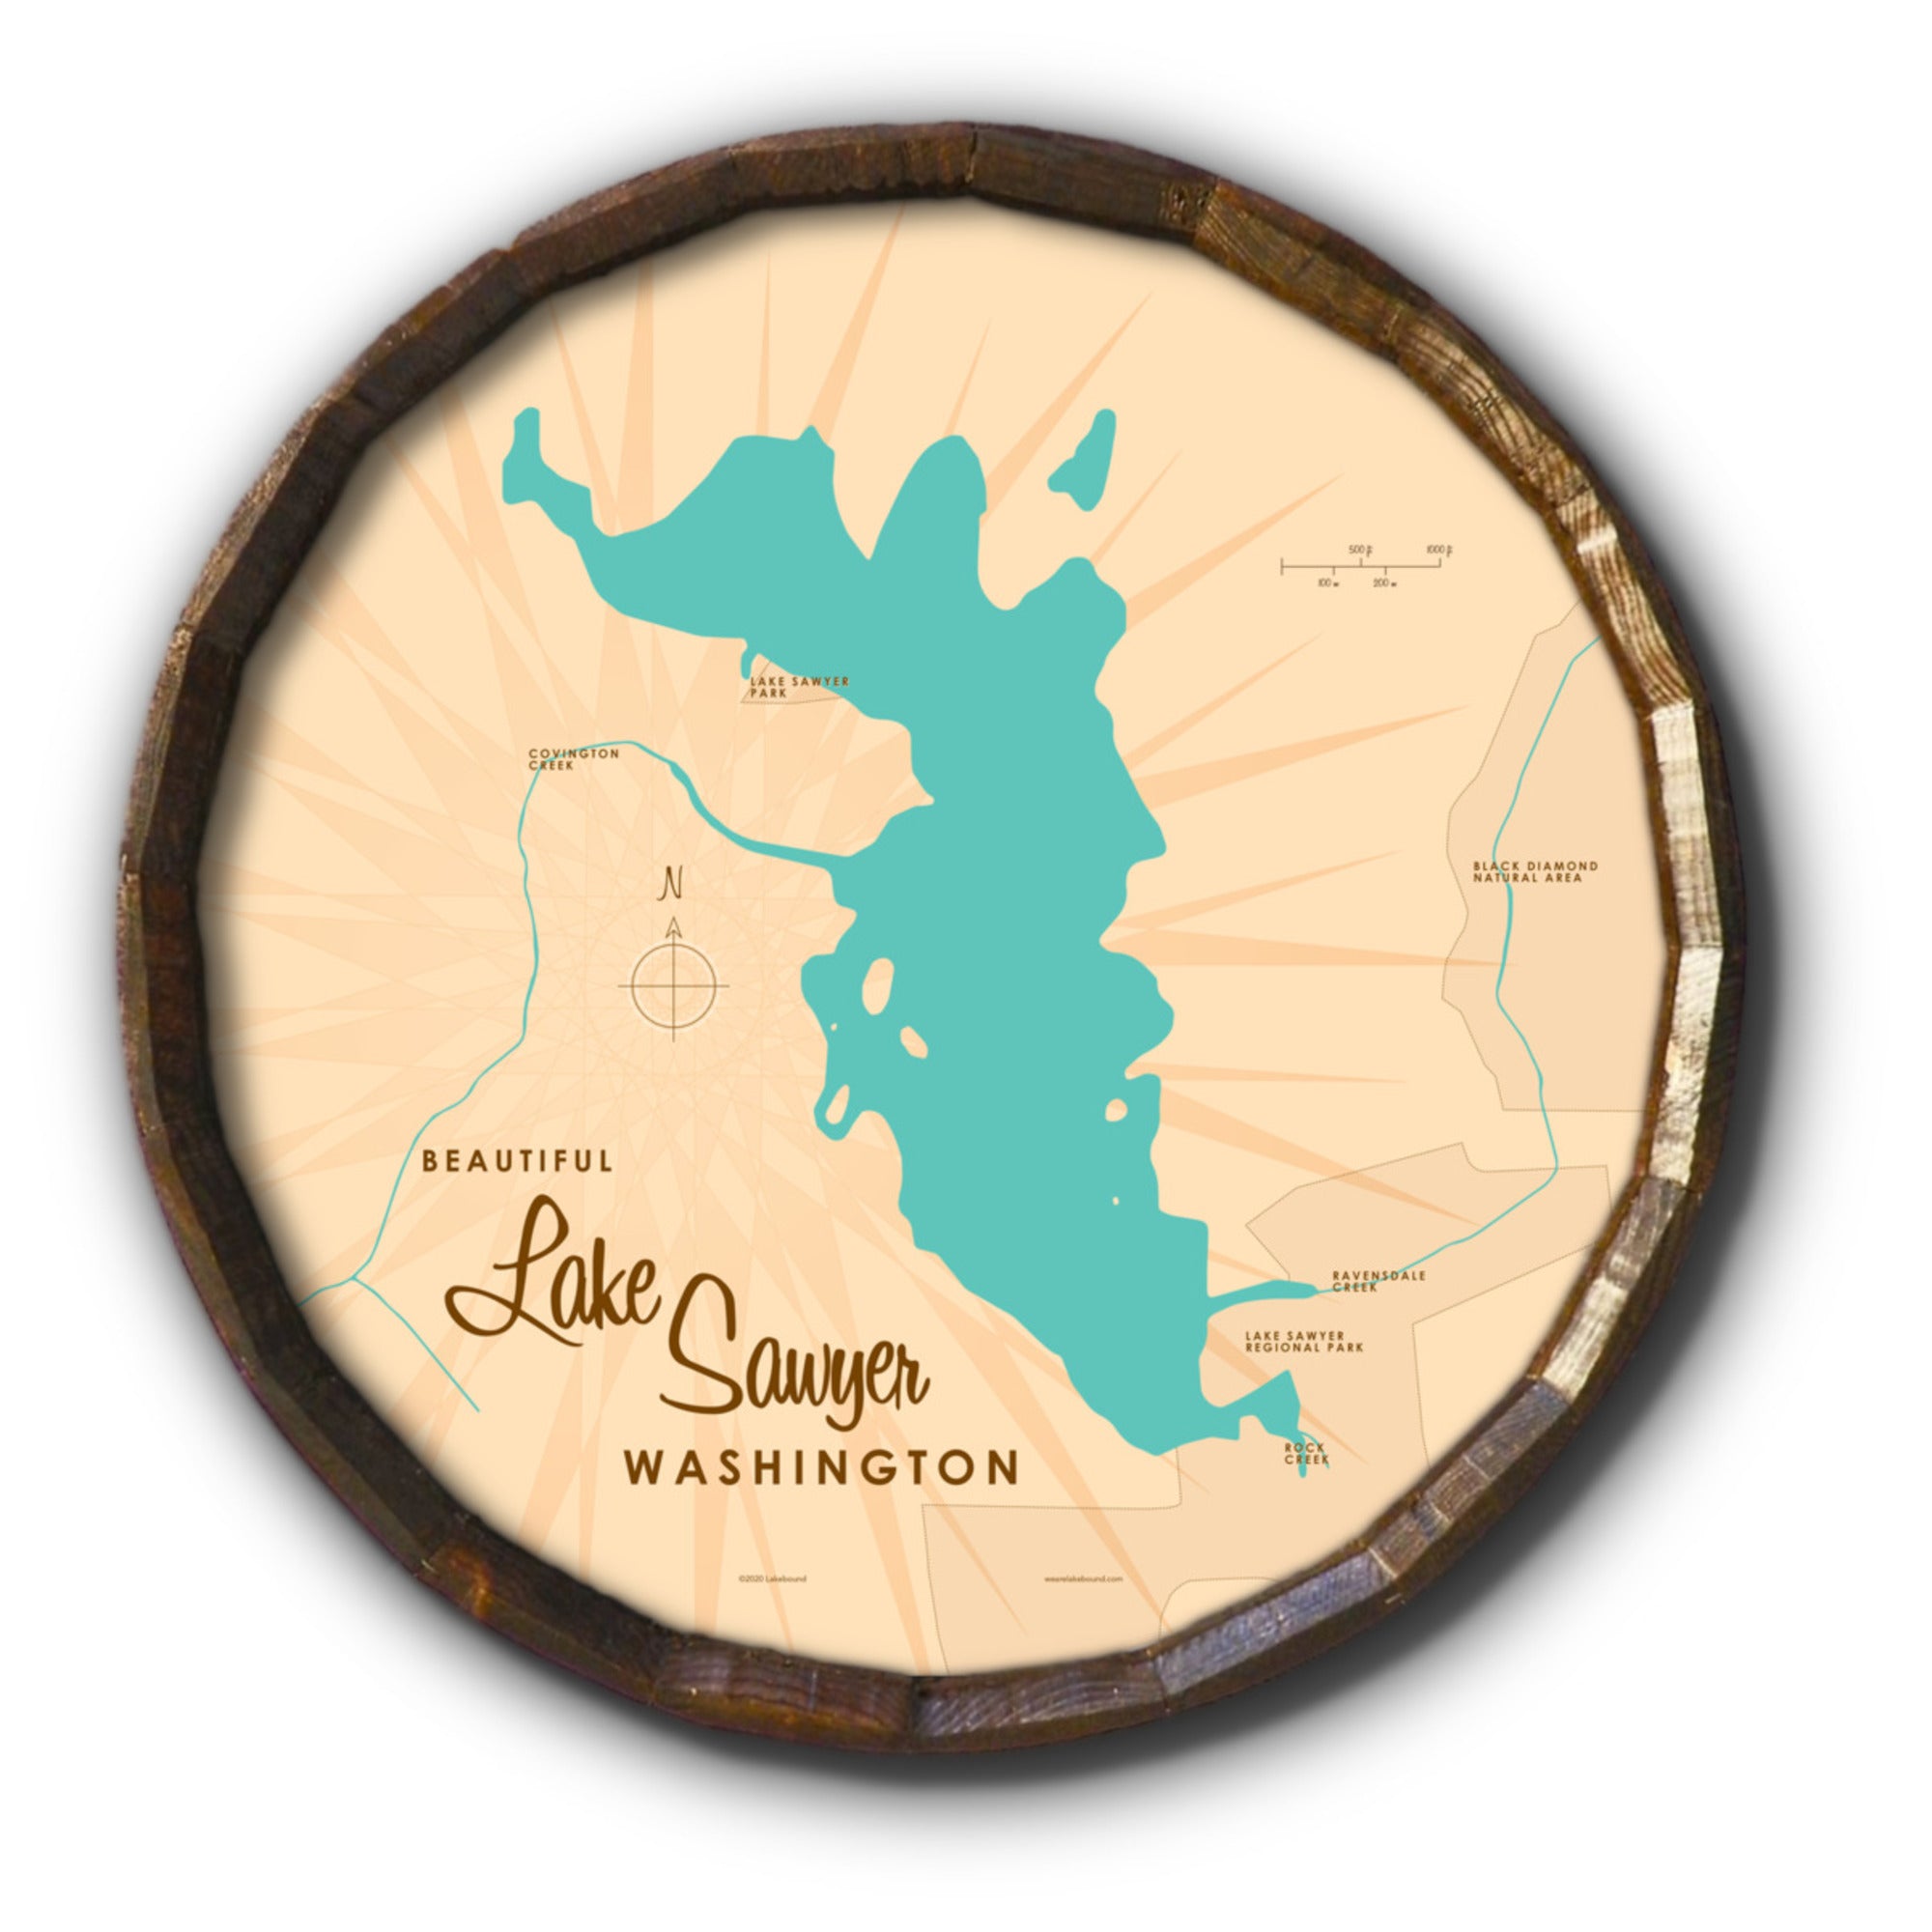 Lake Sawyer Washington, Barrel End Map Art